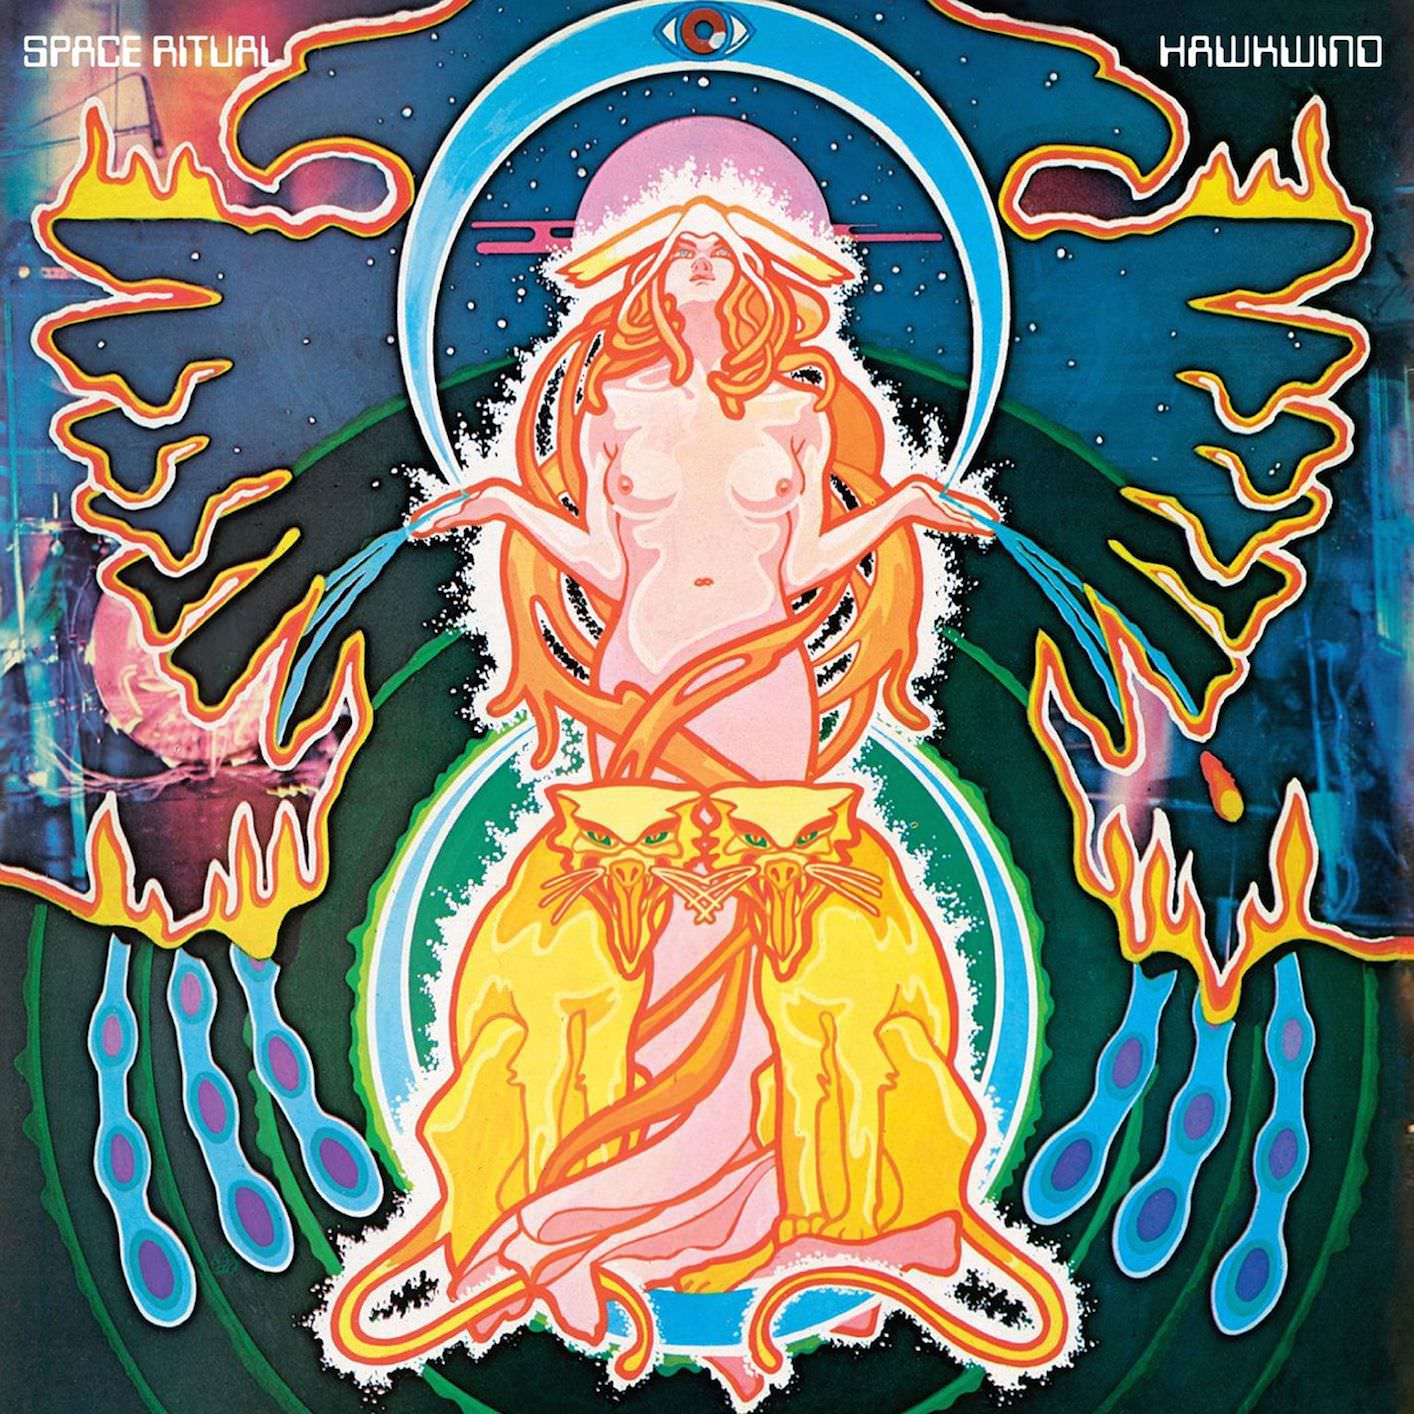 Hawkwind – The Space Ritual Alive (Original Master) (1973/2015) [7Digital FLAC 24bit/96kHz]